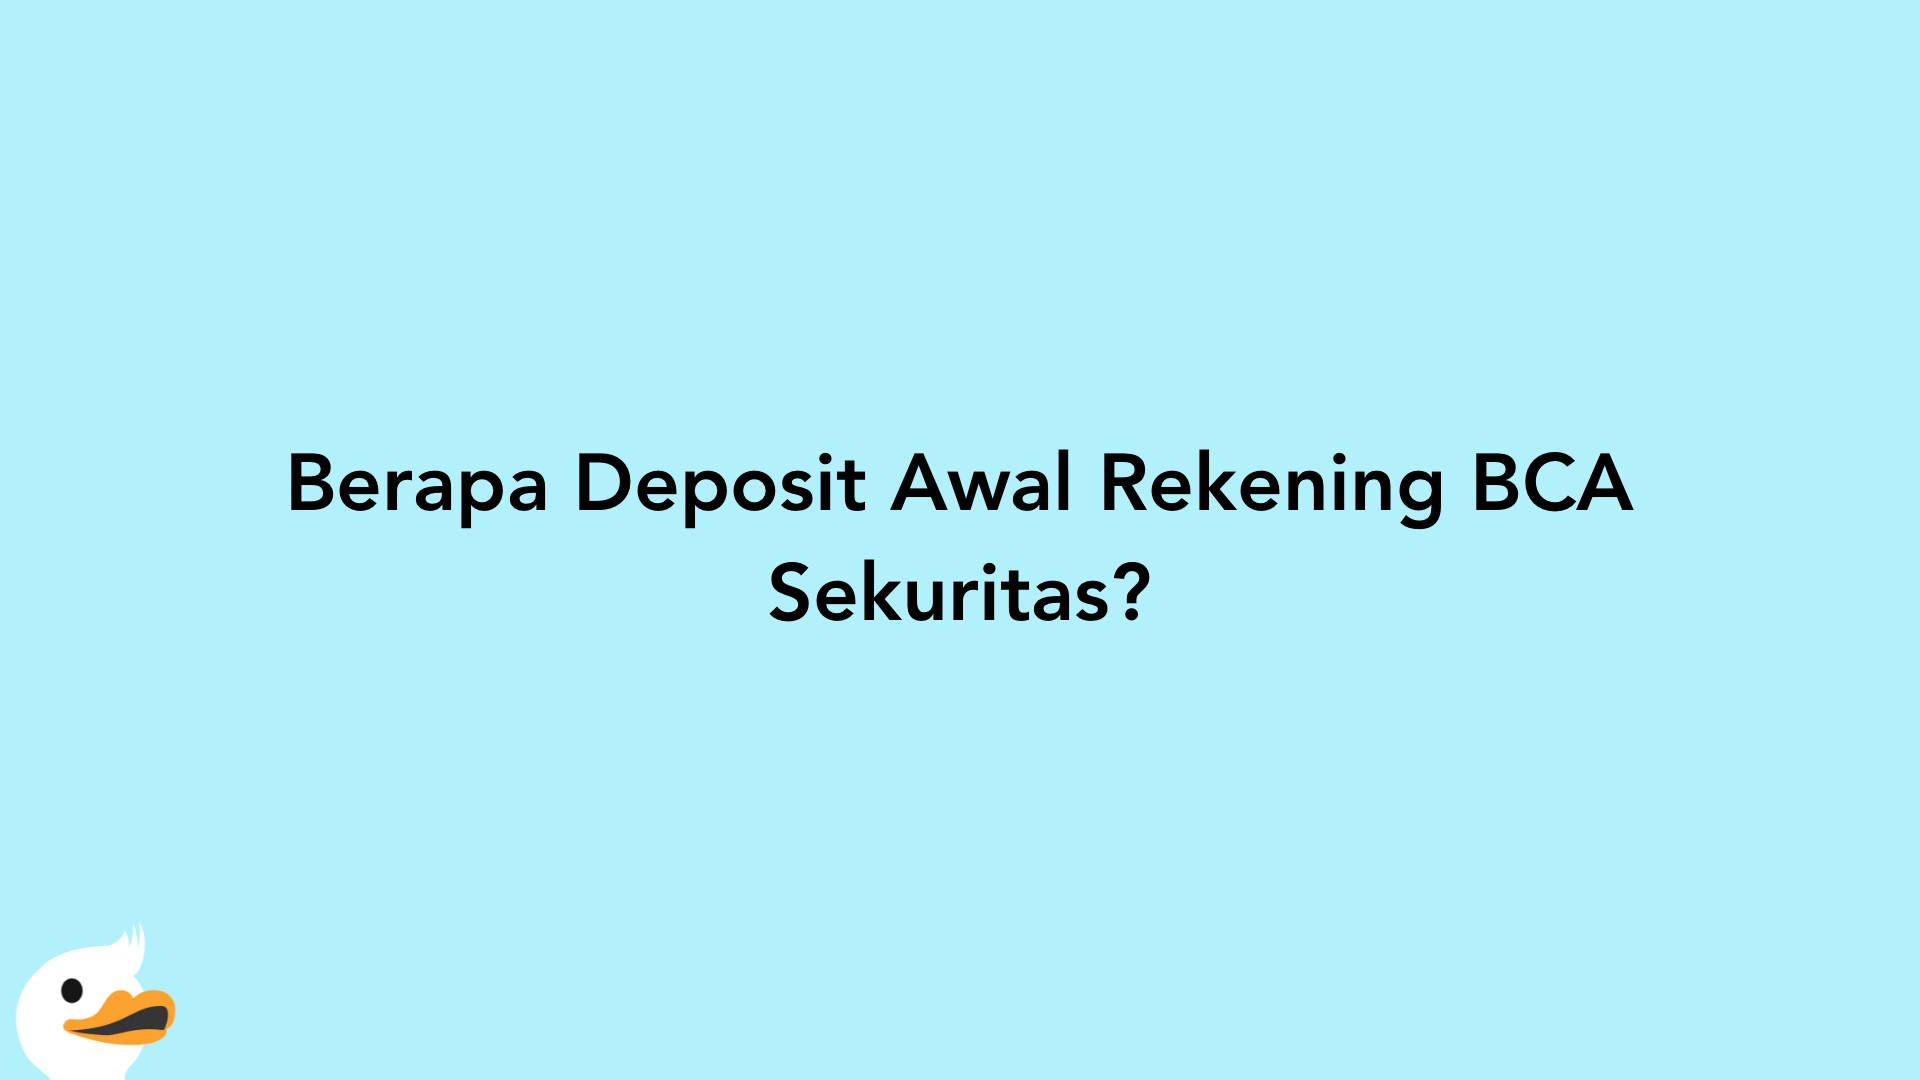 Berapa Deposit Awal Rekening BCA Sekuritas?